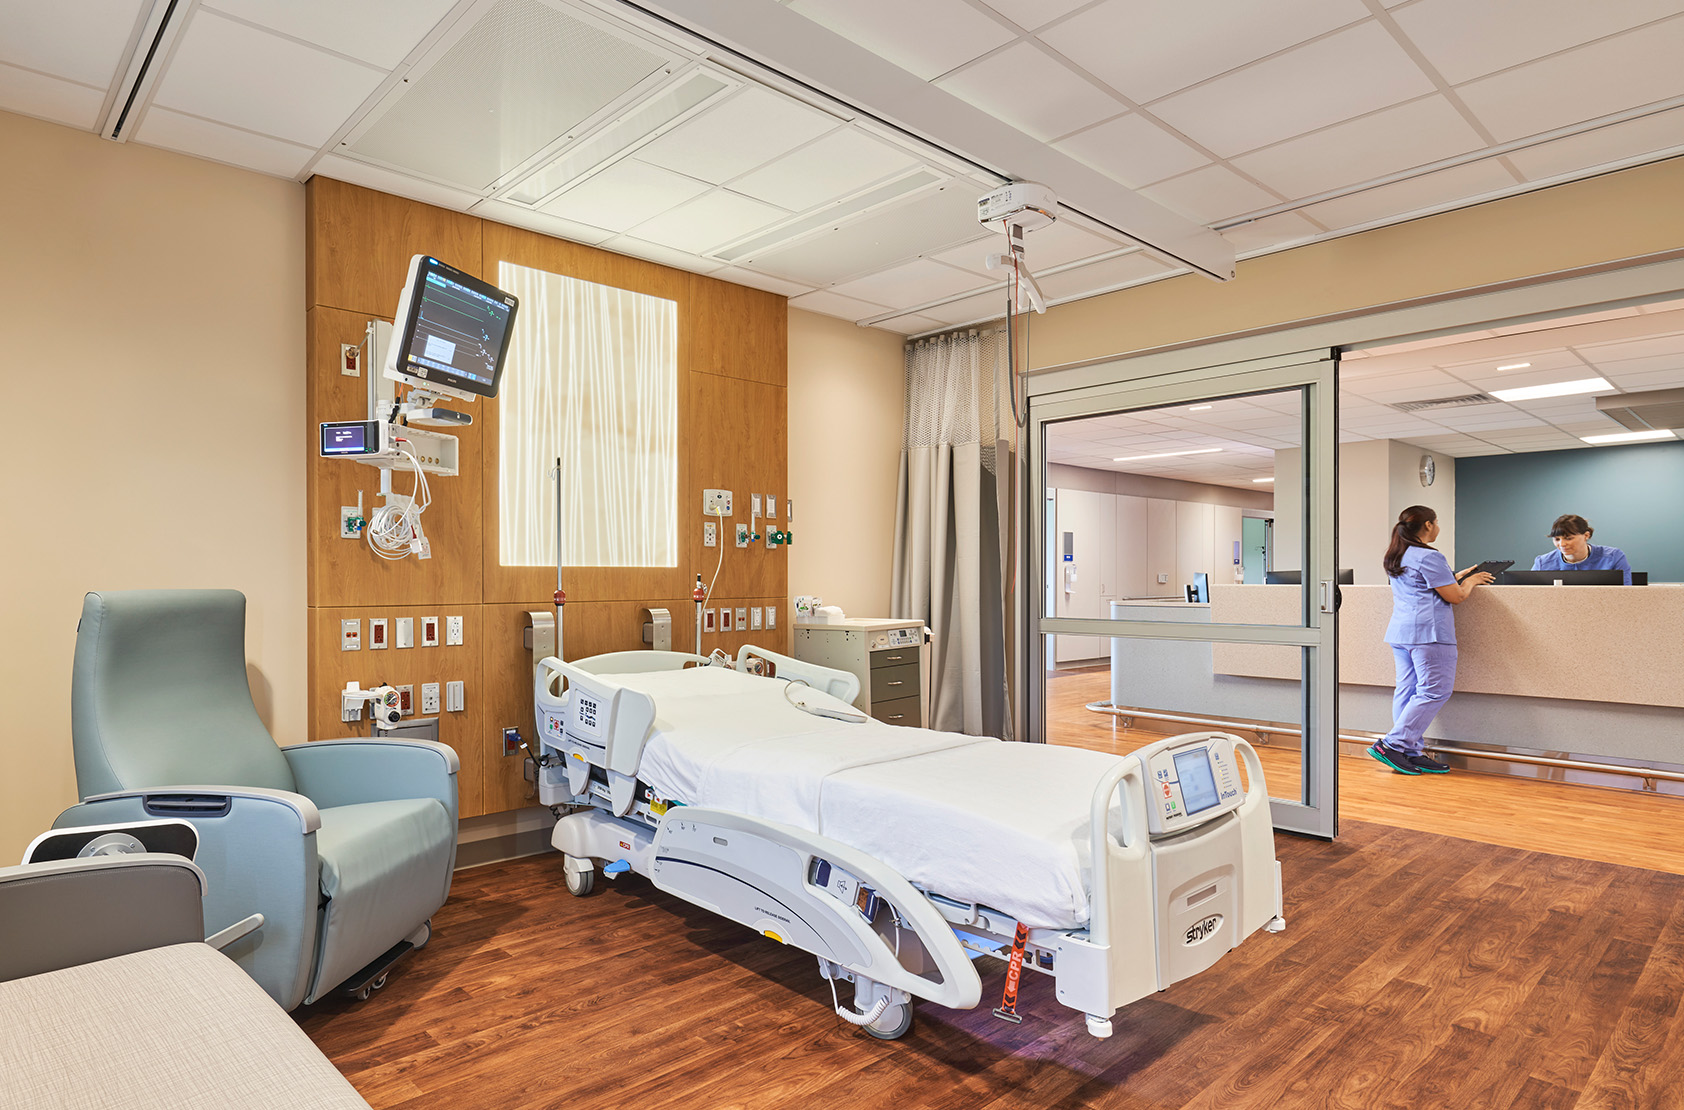 Penn State Health - Milton S. Hershey Medical Center ICU Renovation